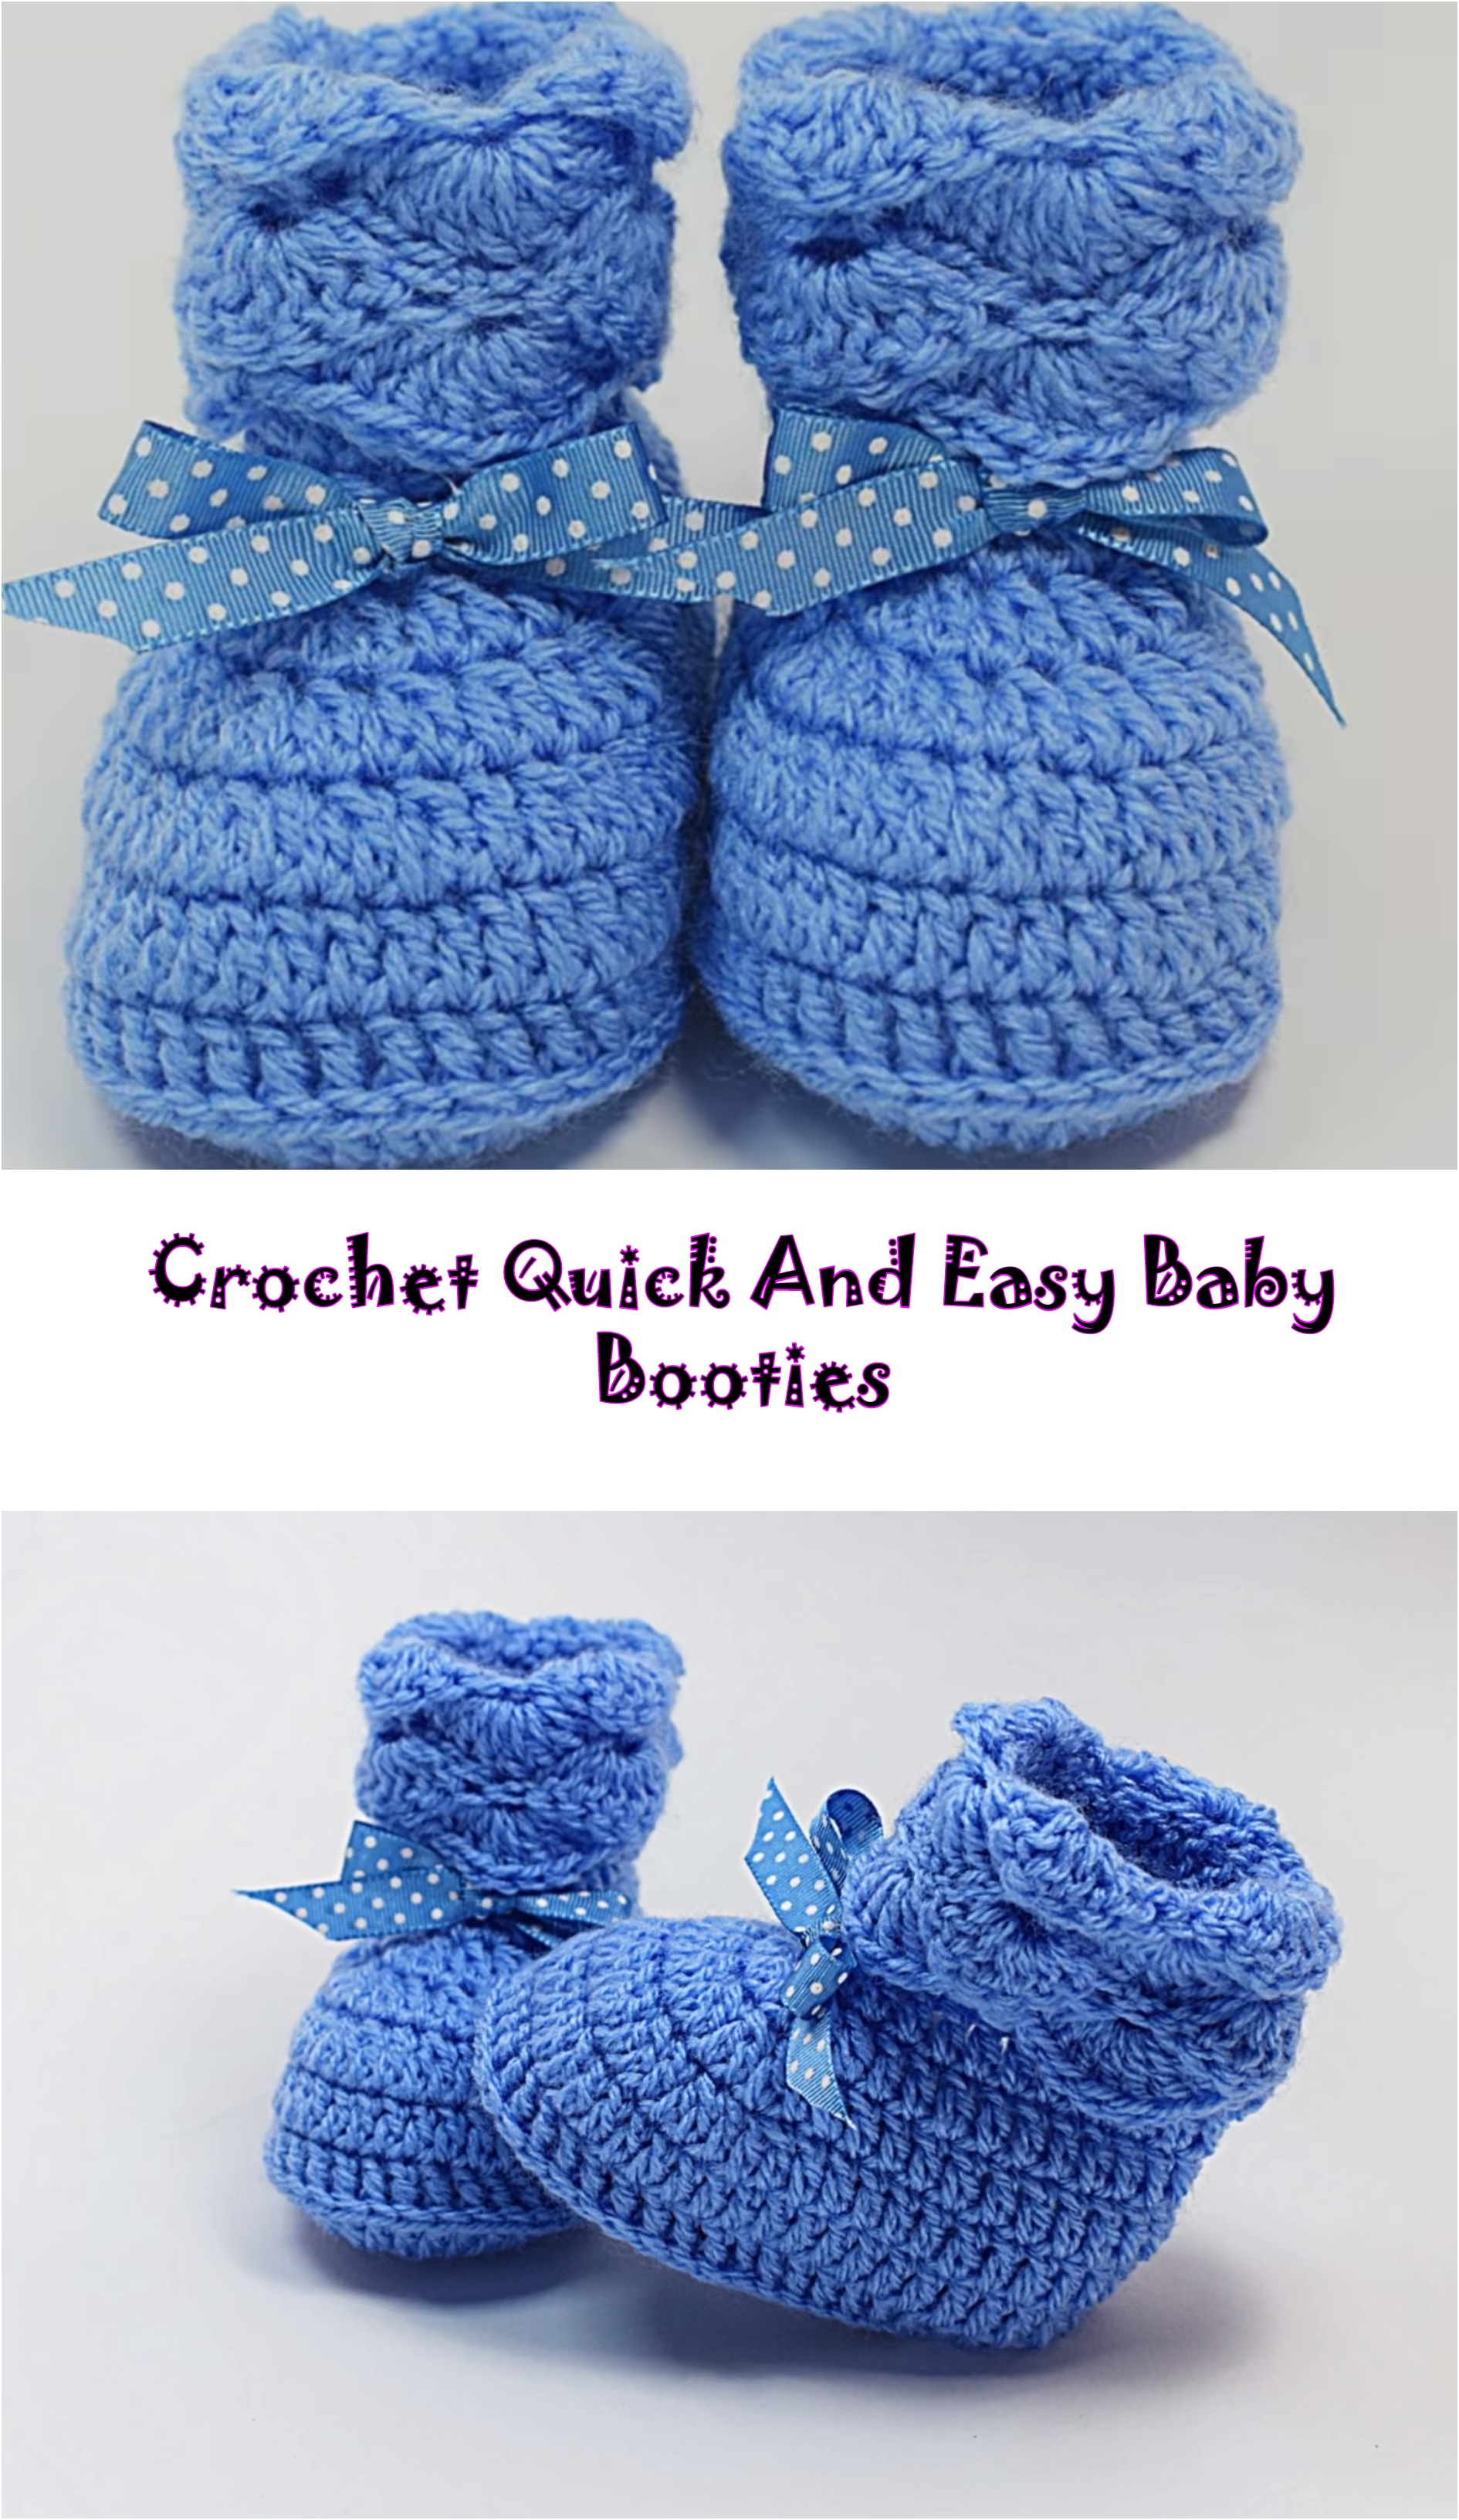 Crochet Quick And Easy Baby Booties